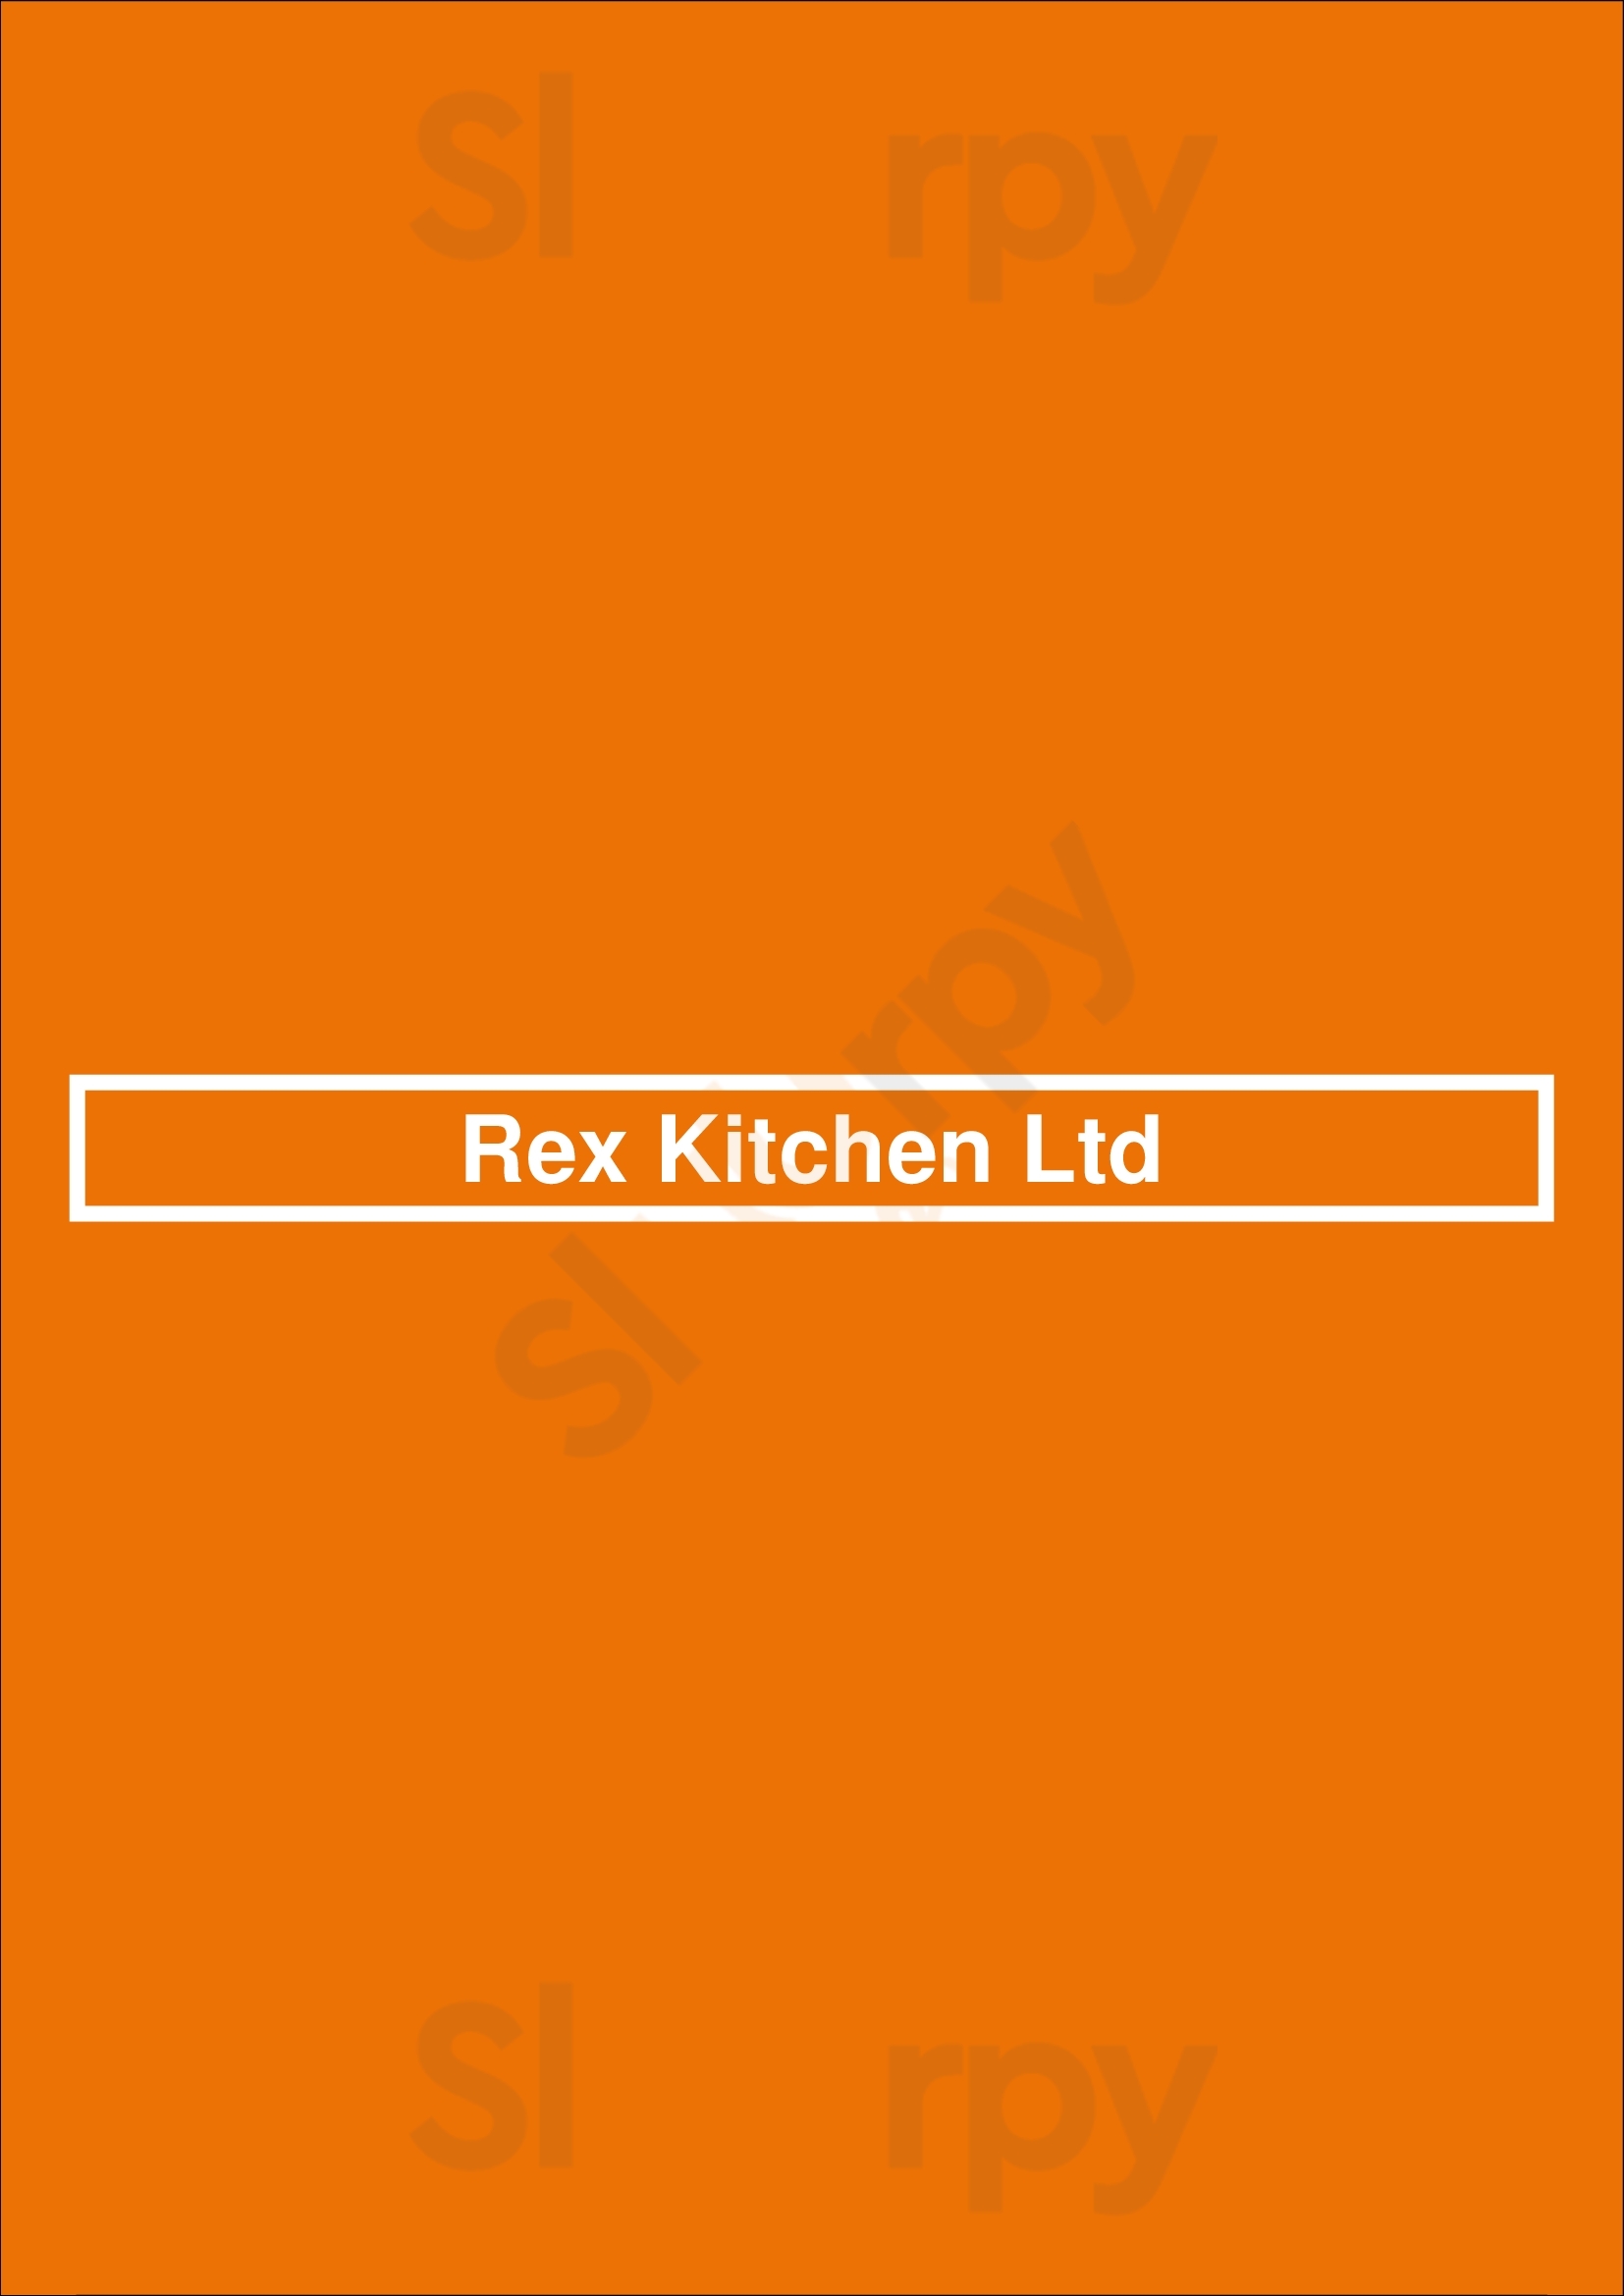 Rex Kitchen Ltd Maple Ridge Menu - 1